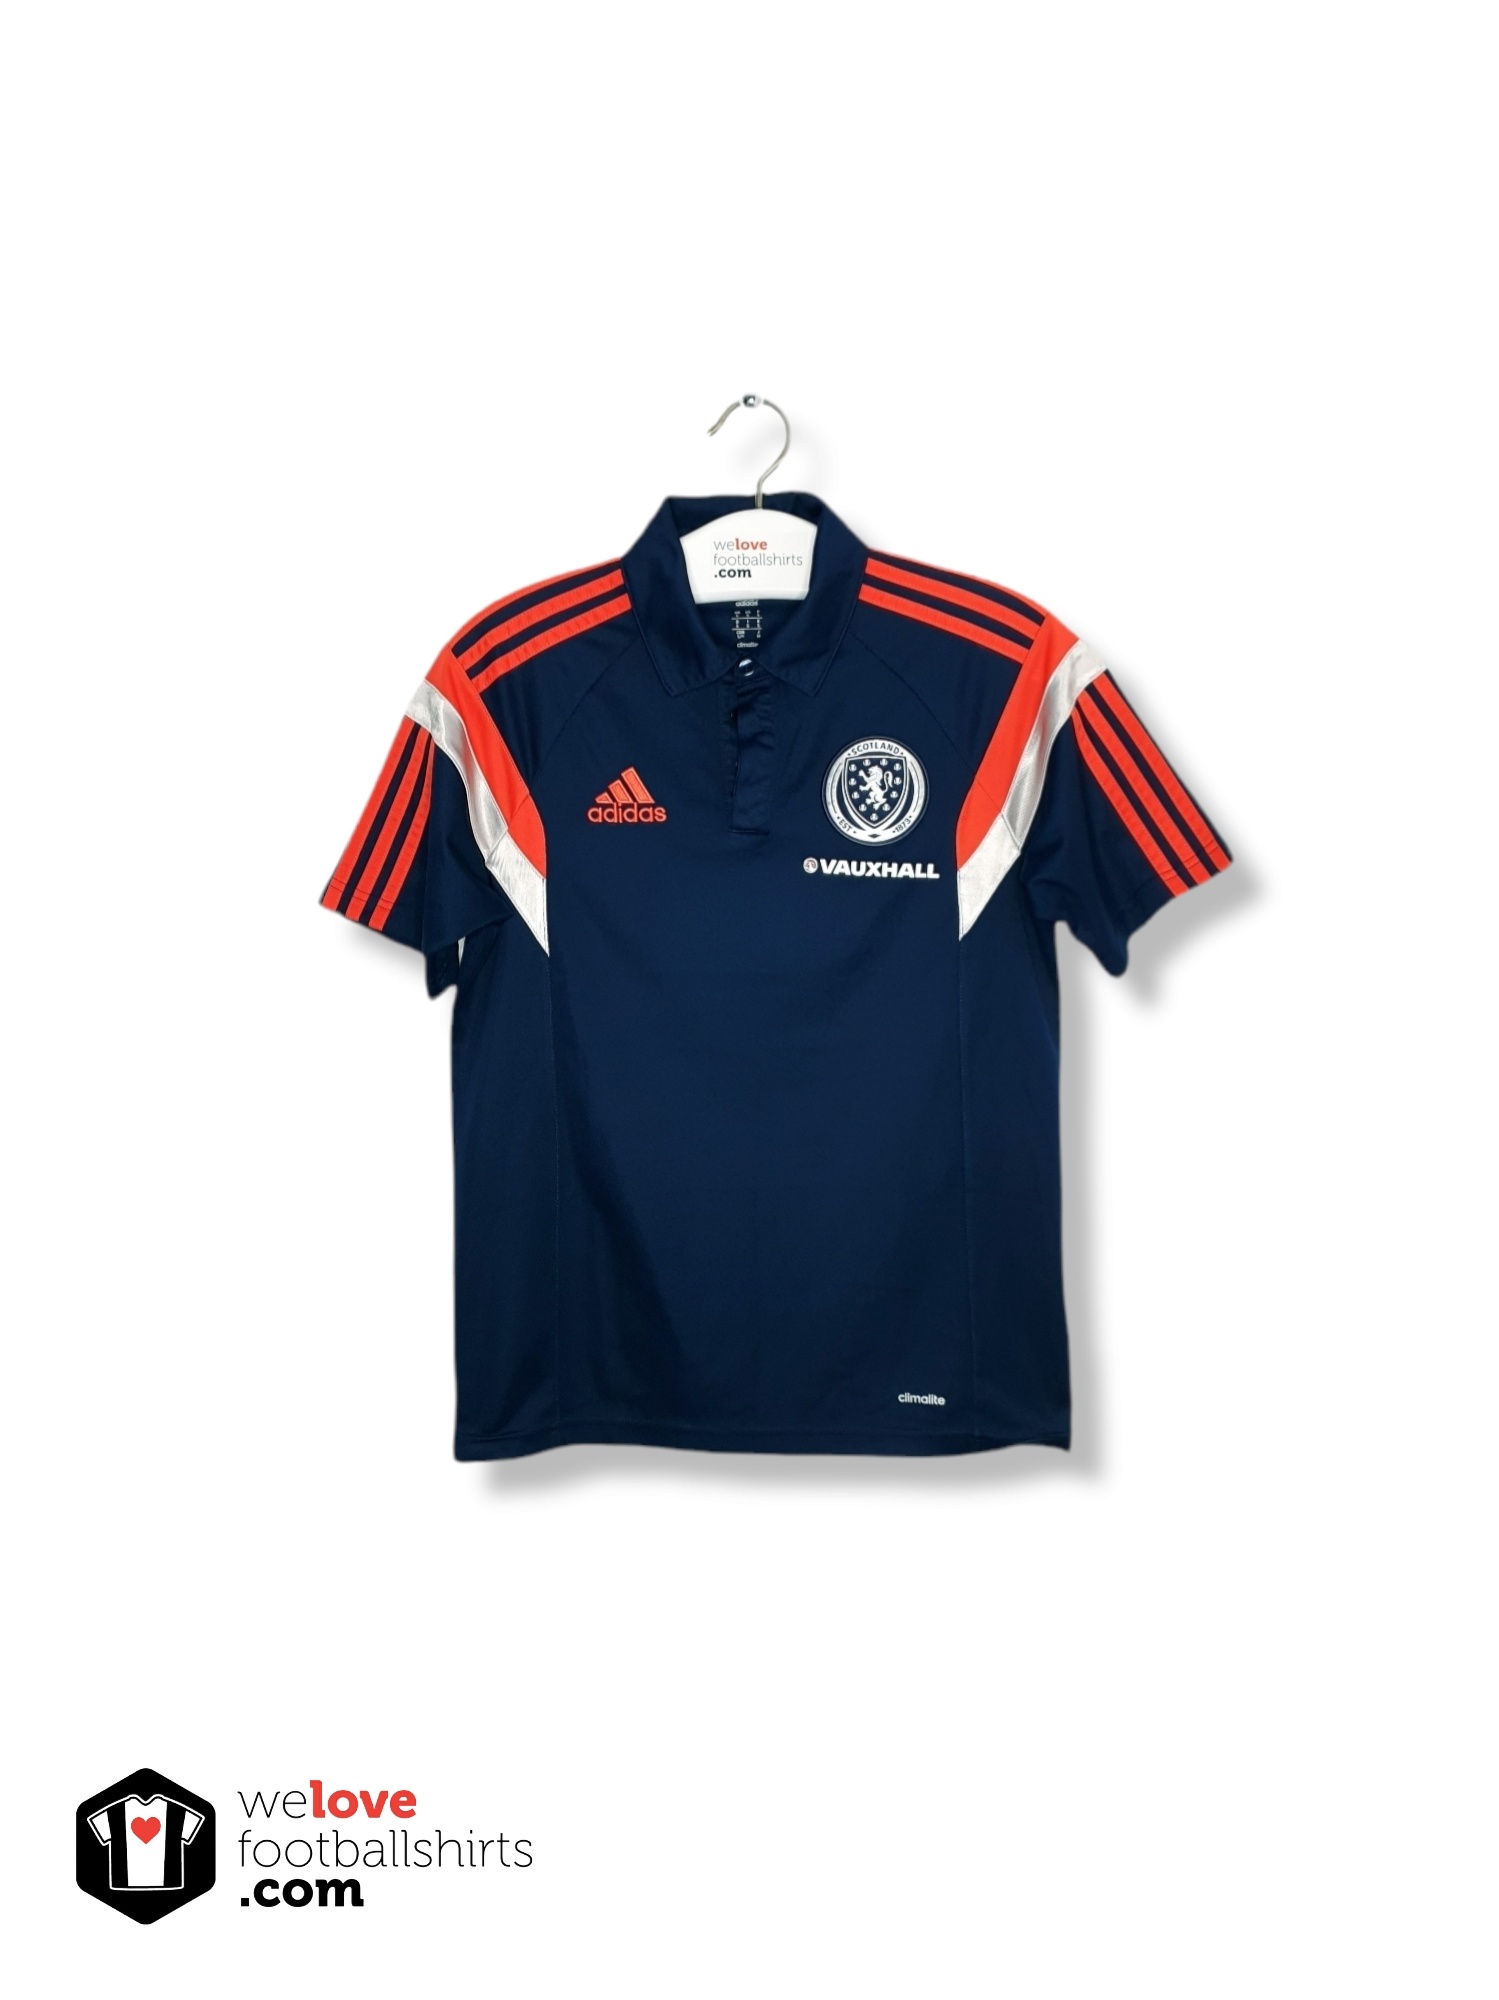 Adidas Polo 2014/15 Welovefootballshirts.com